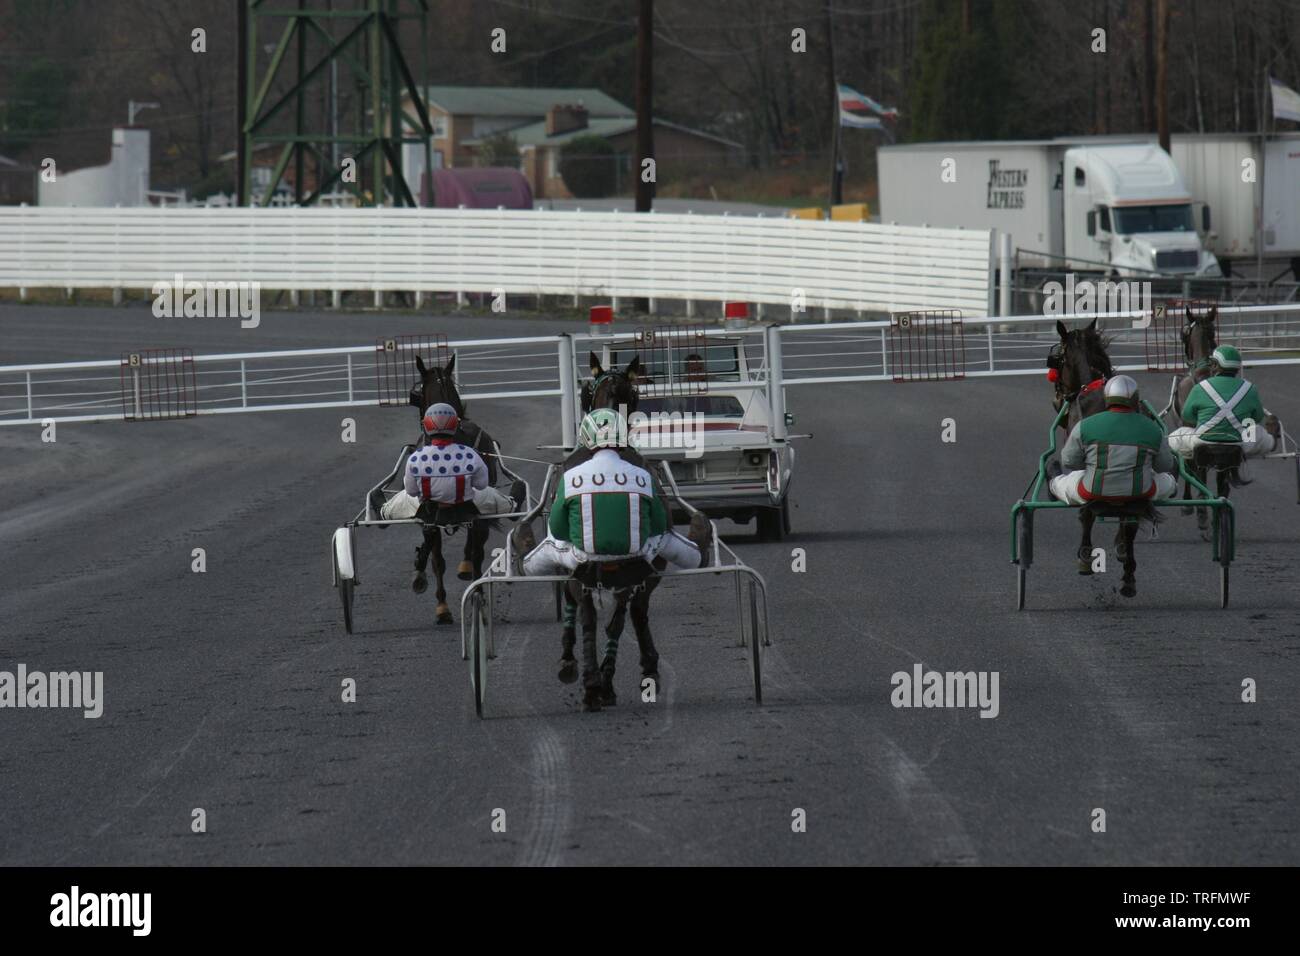 Rosecroft Raceway Stock Photo